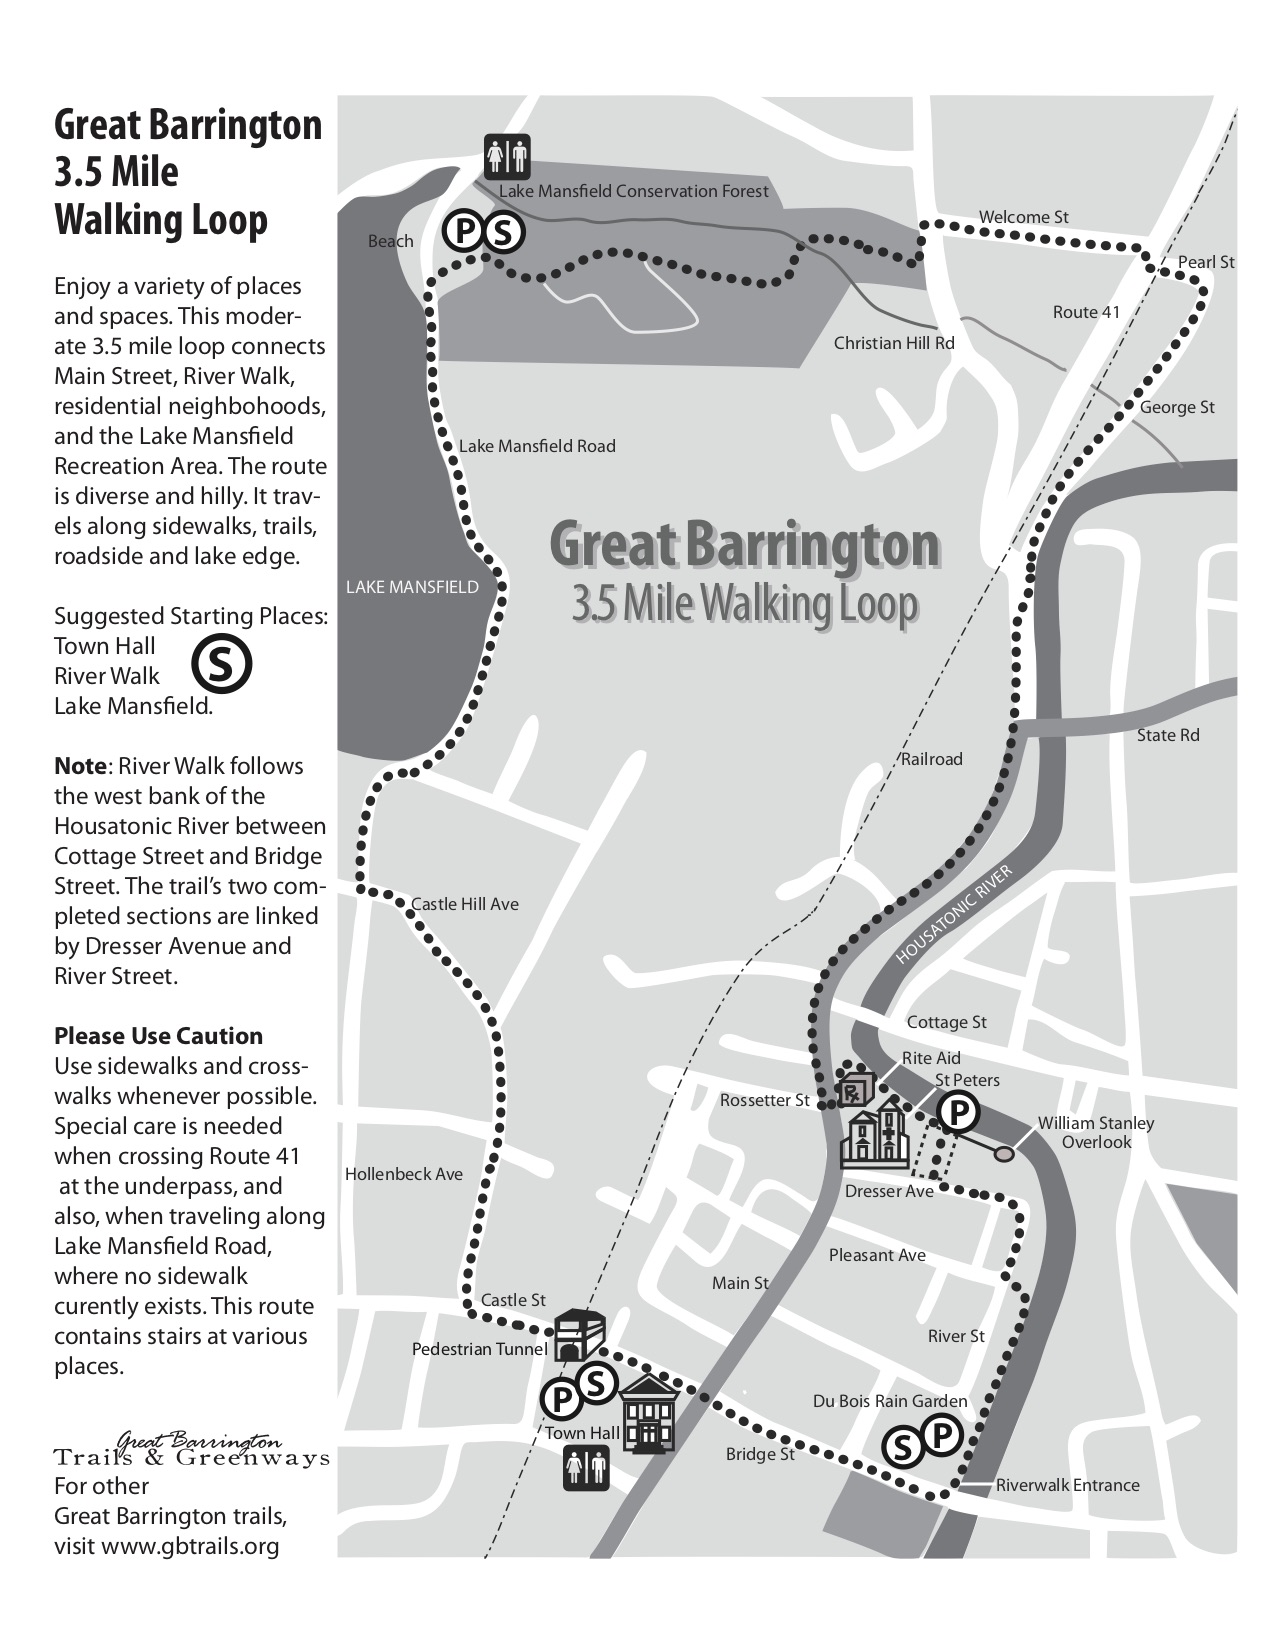 Great Barrington Walking Loop trail map